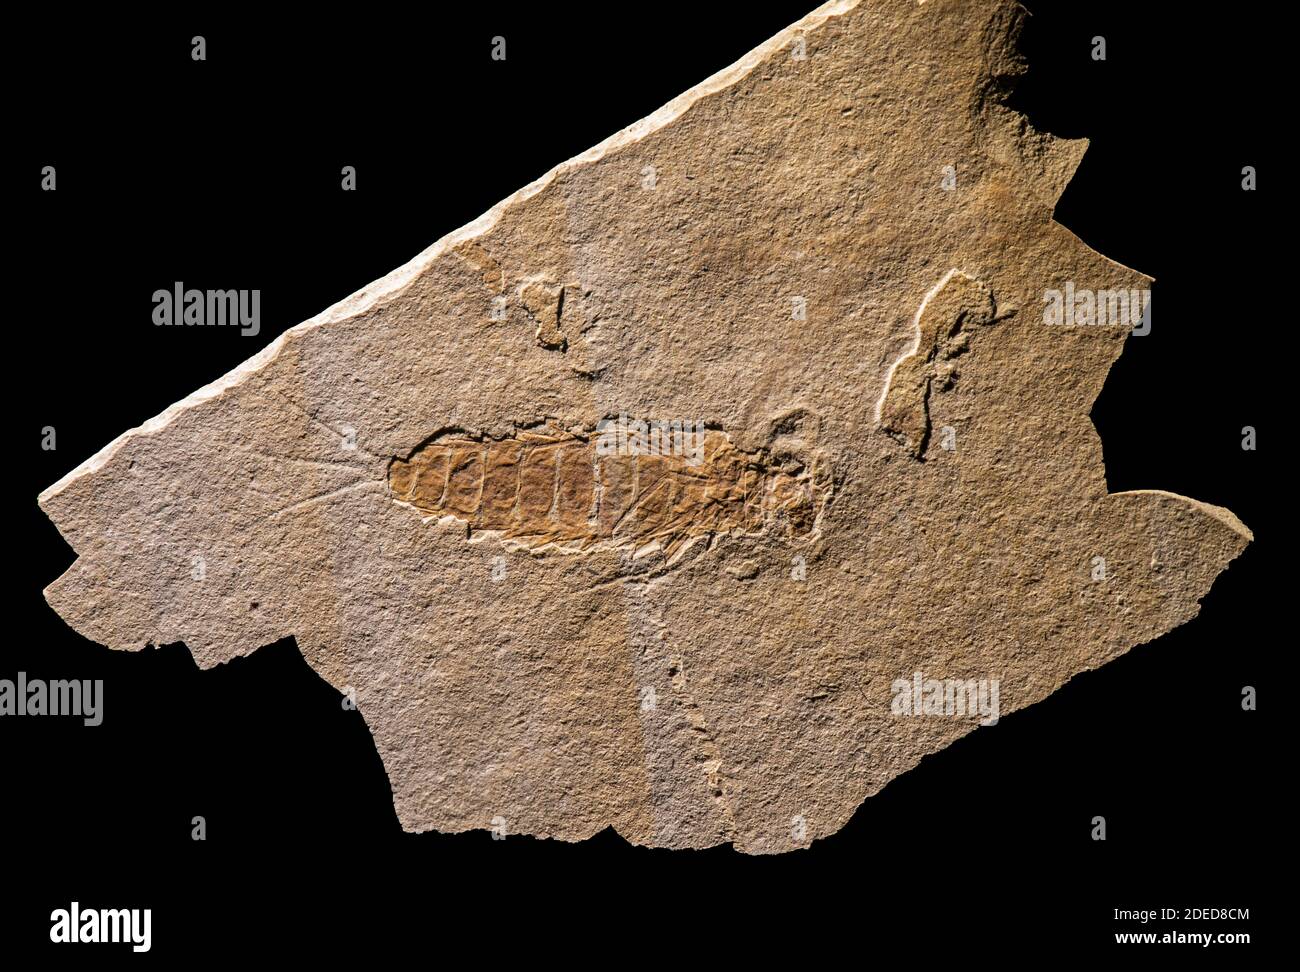 Fossile Mayfly Larva (Ephemerida) Jurassic. Liaoning, Cina. Campione lungo circa 4,5 cm. Foto Stock